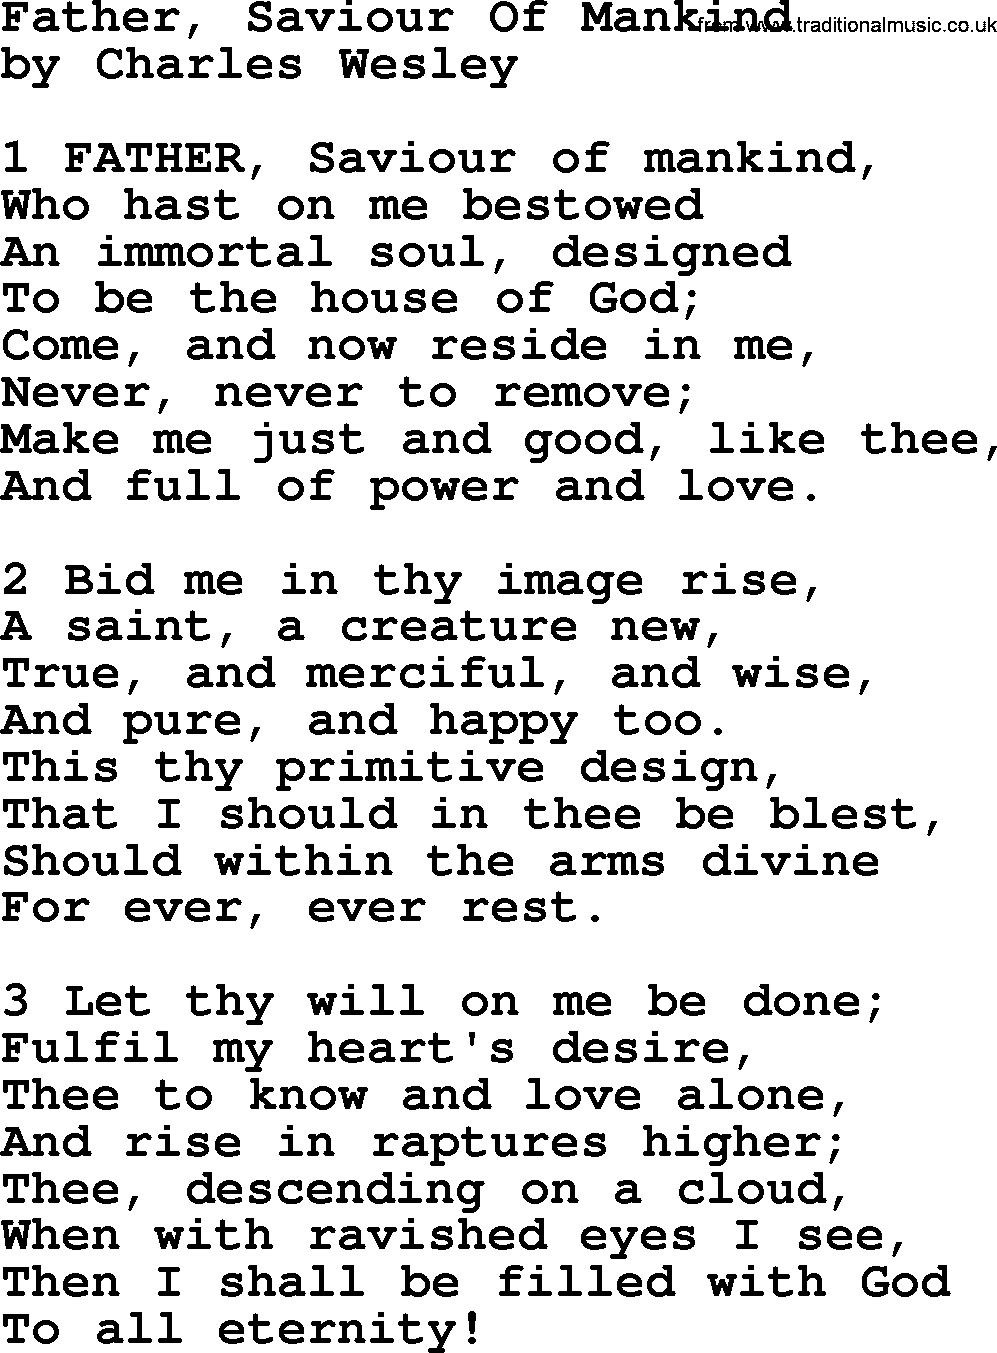 Charles Wesley hymn: Father, Saviour Of Mankind, lyrics